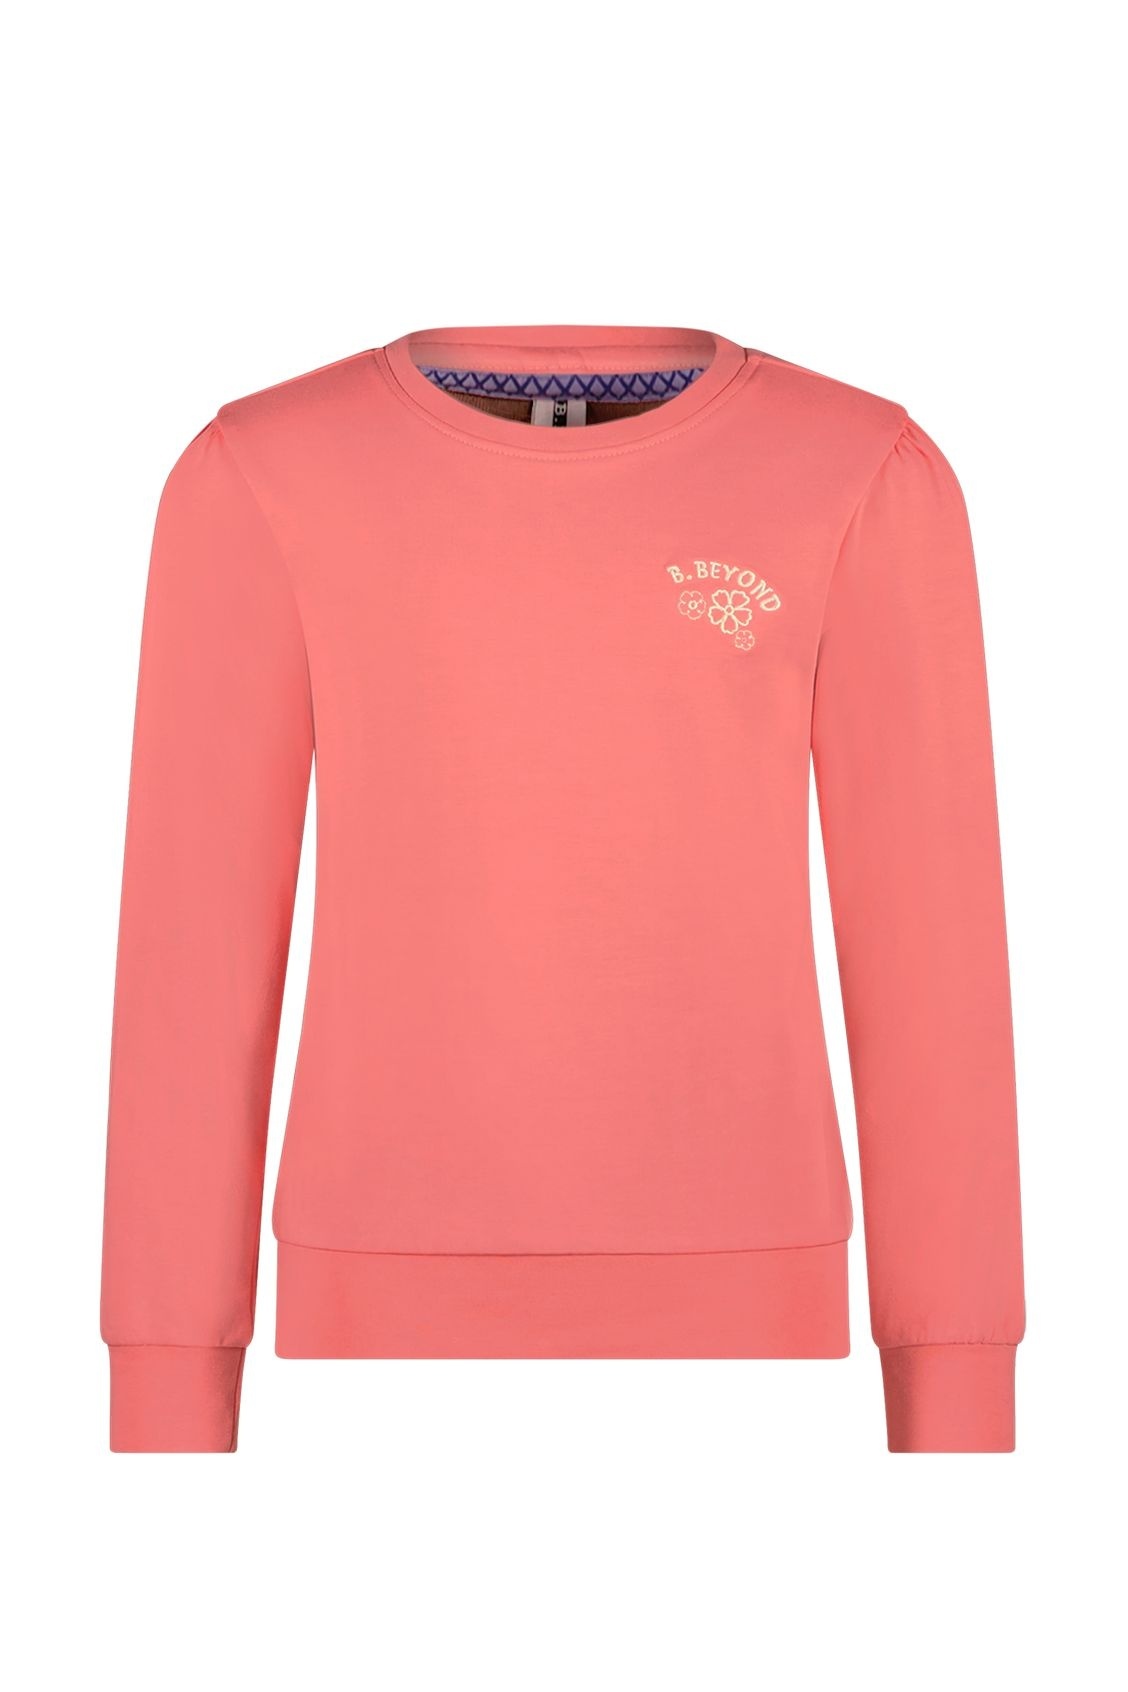 B.Nosy - Sweater Beau - Passion Pink - Maat 122-128